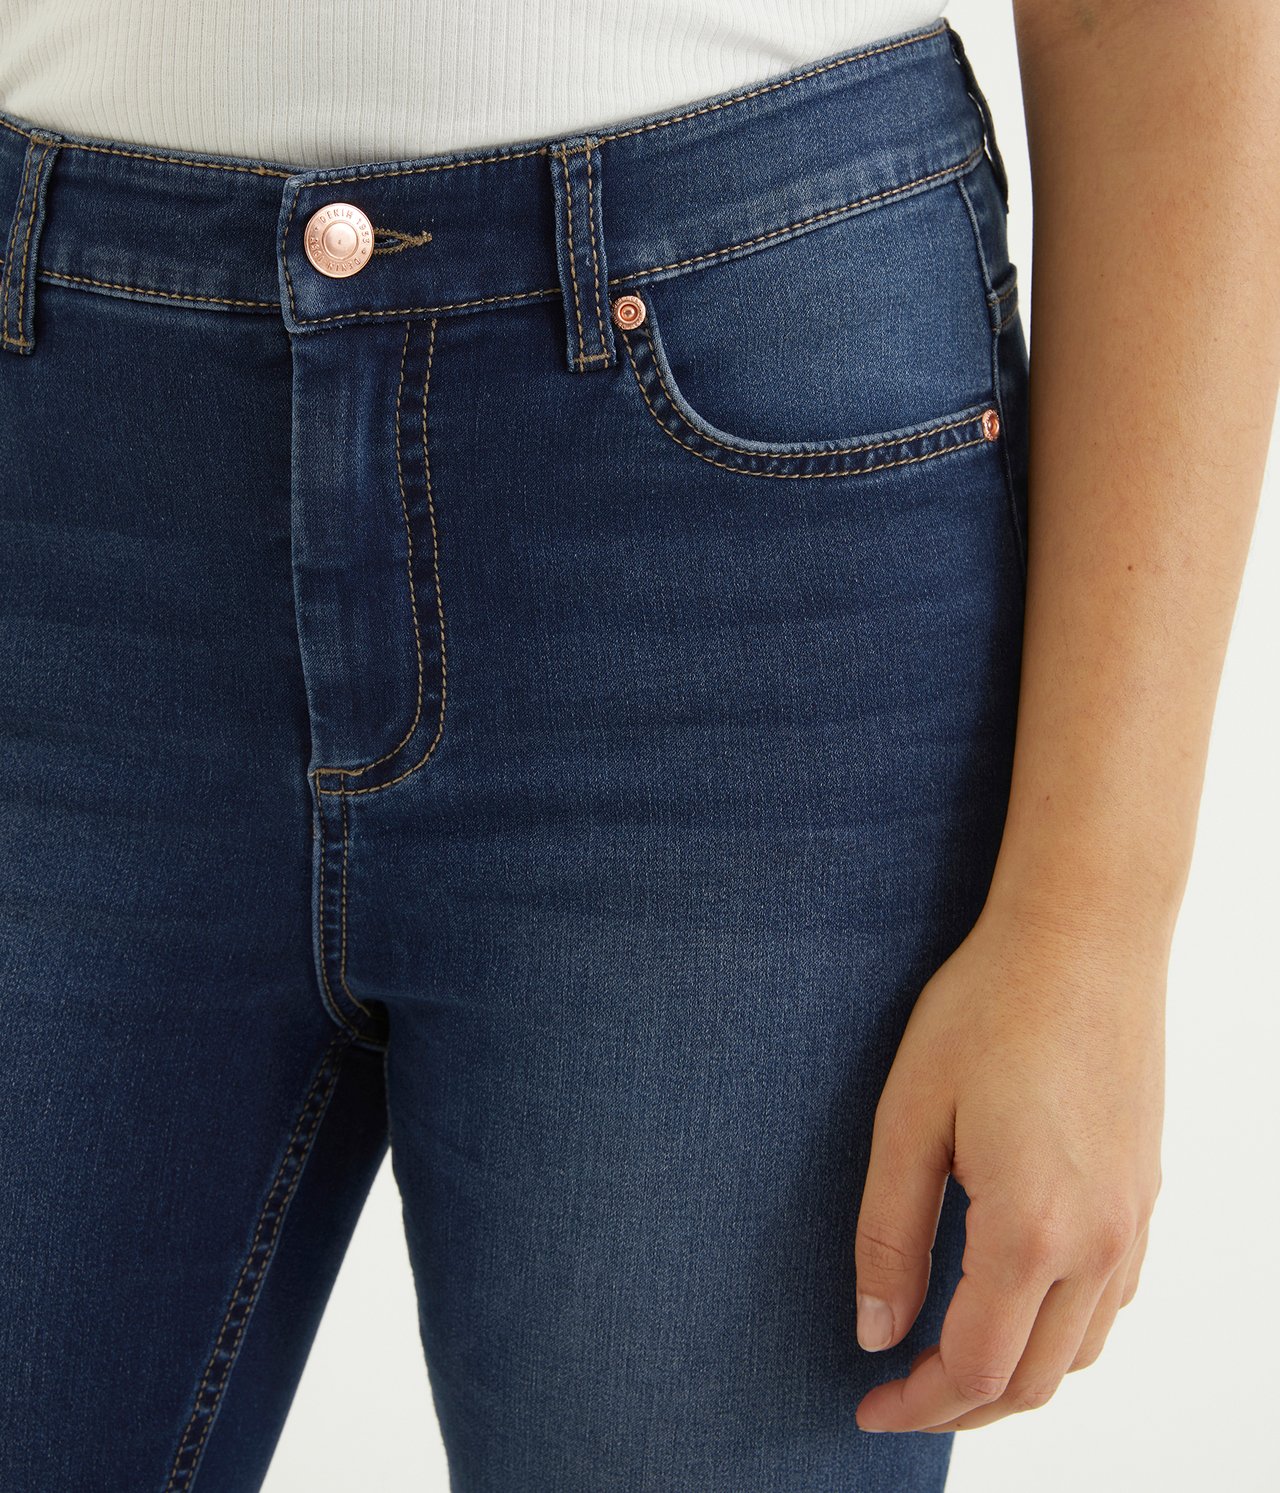 Super slim jeans short leg - Mörk denim - 2